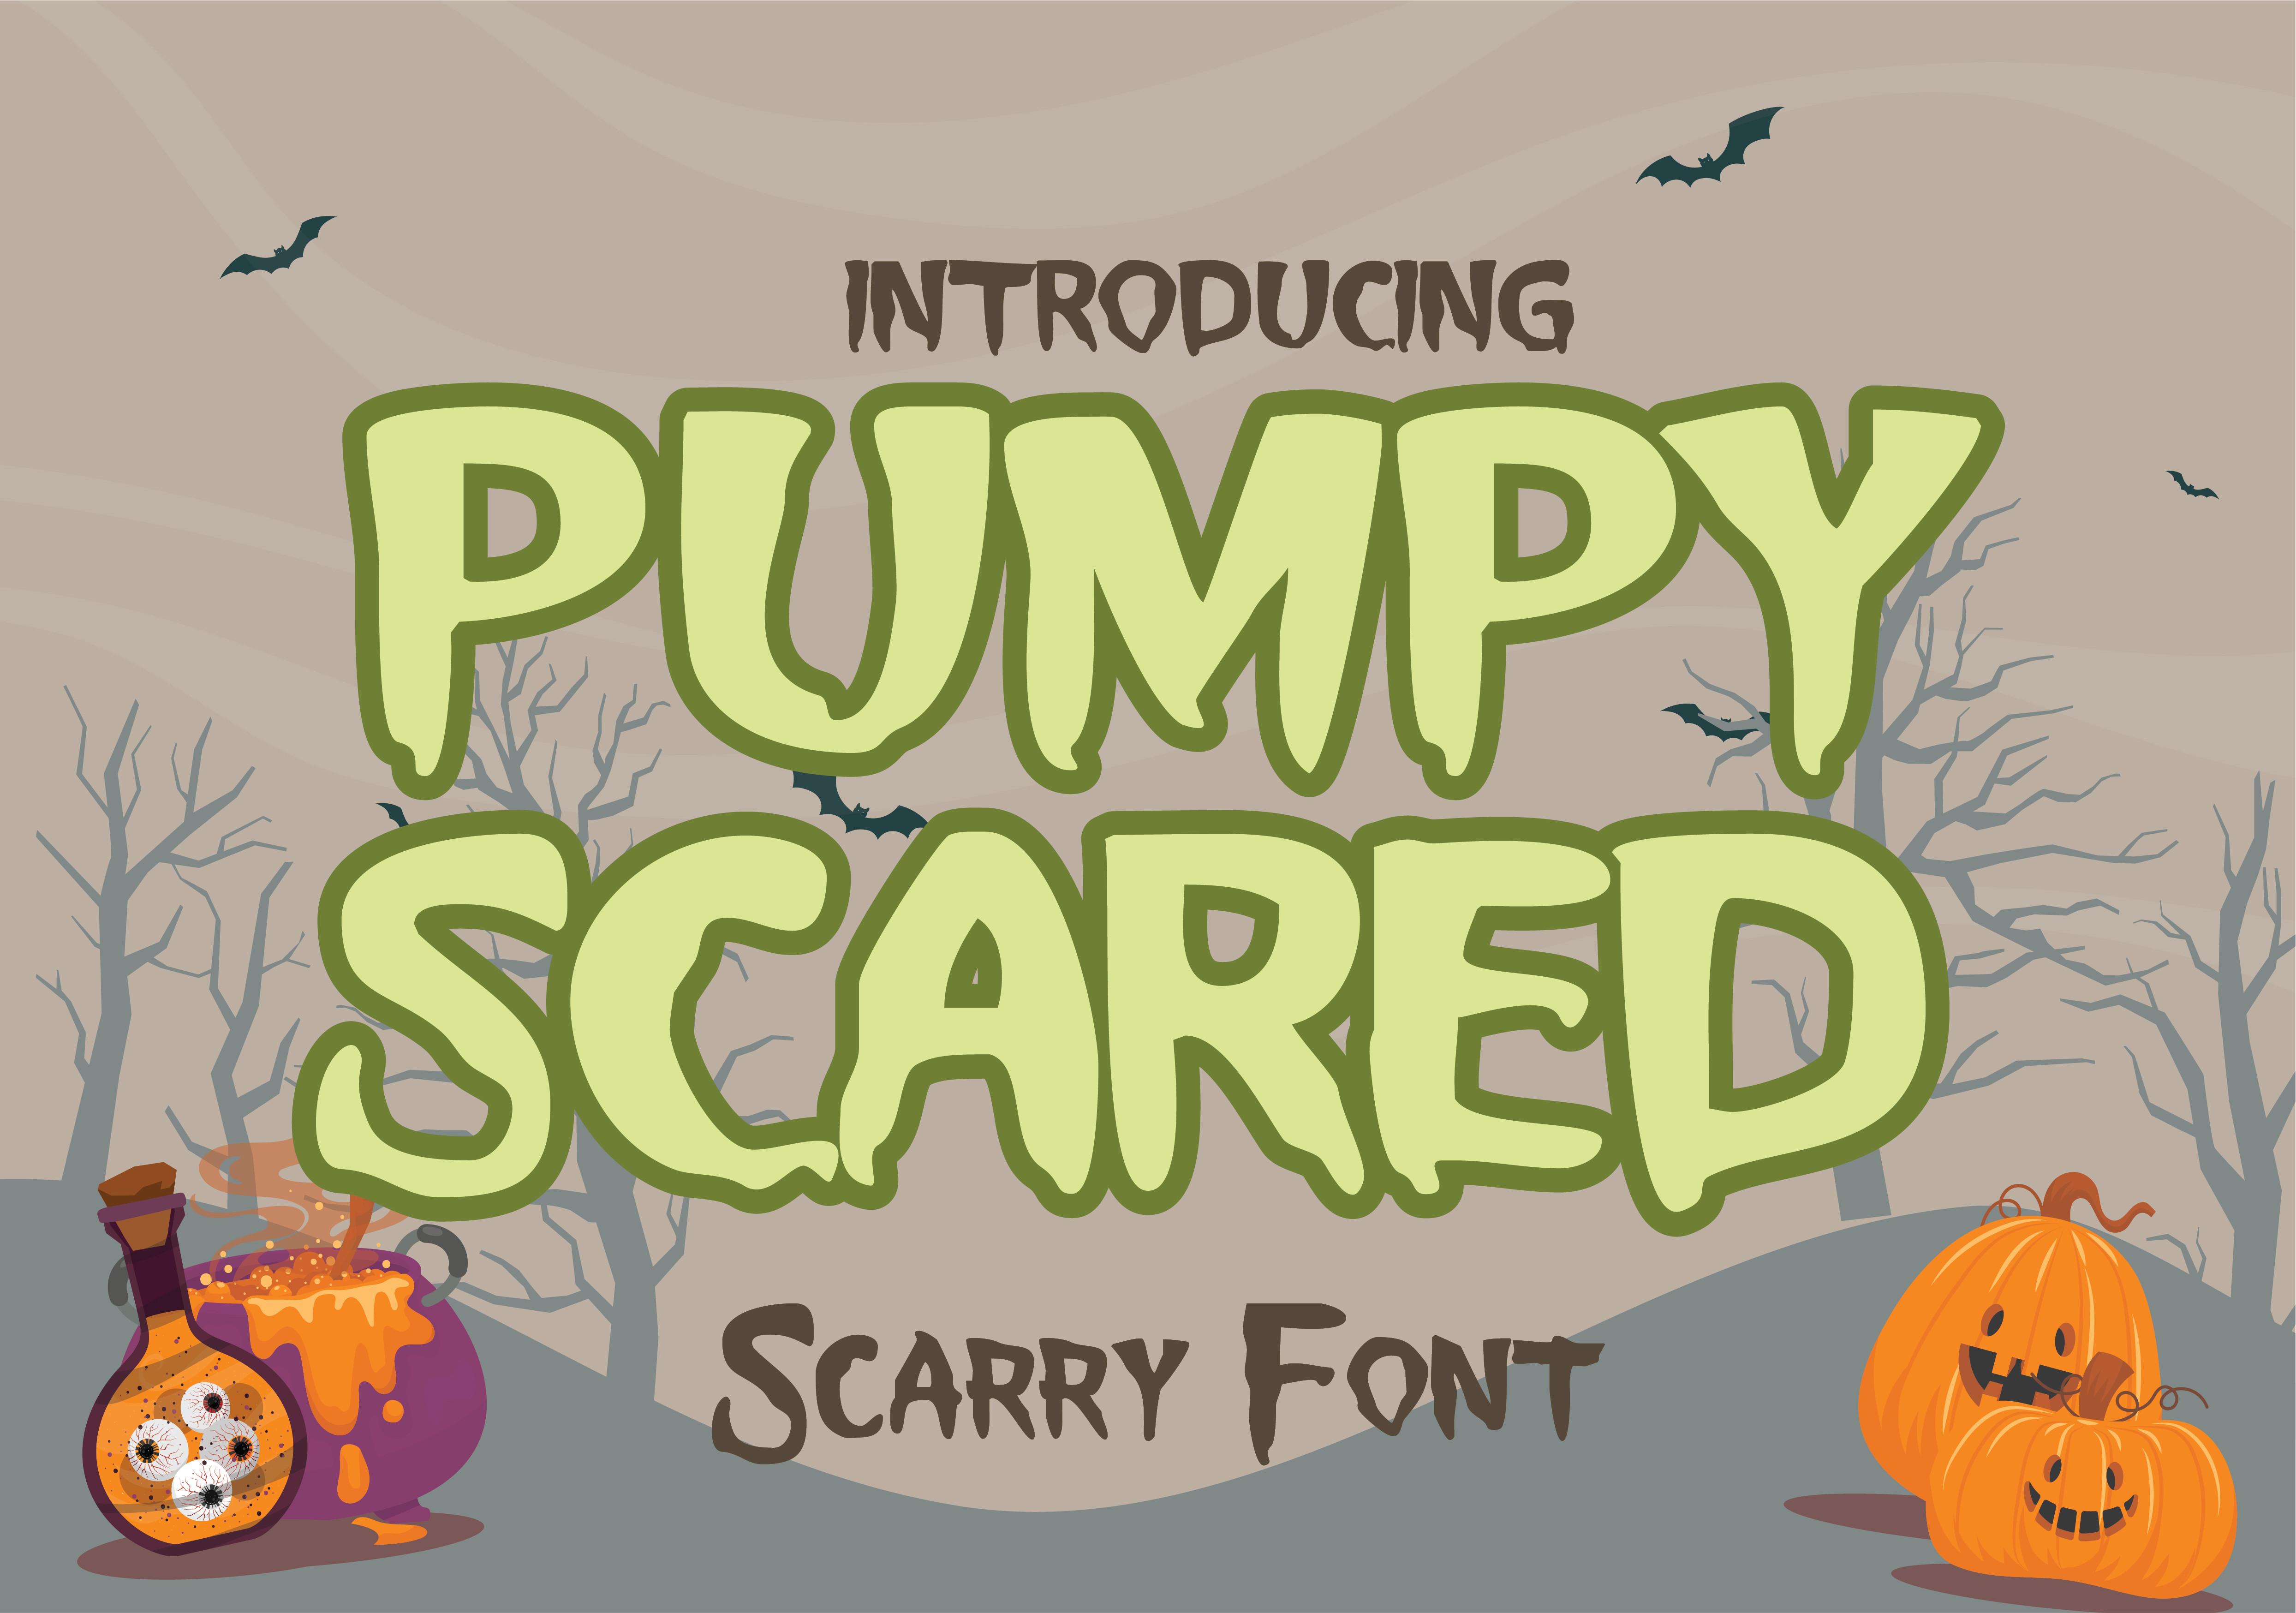 Pumpy Scared Font